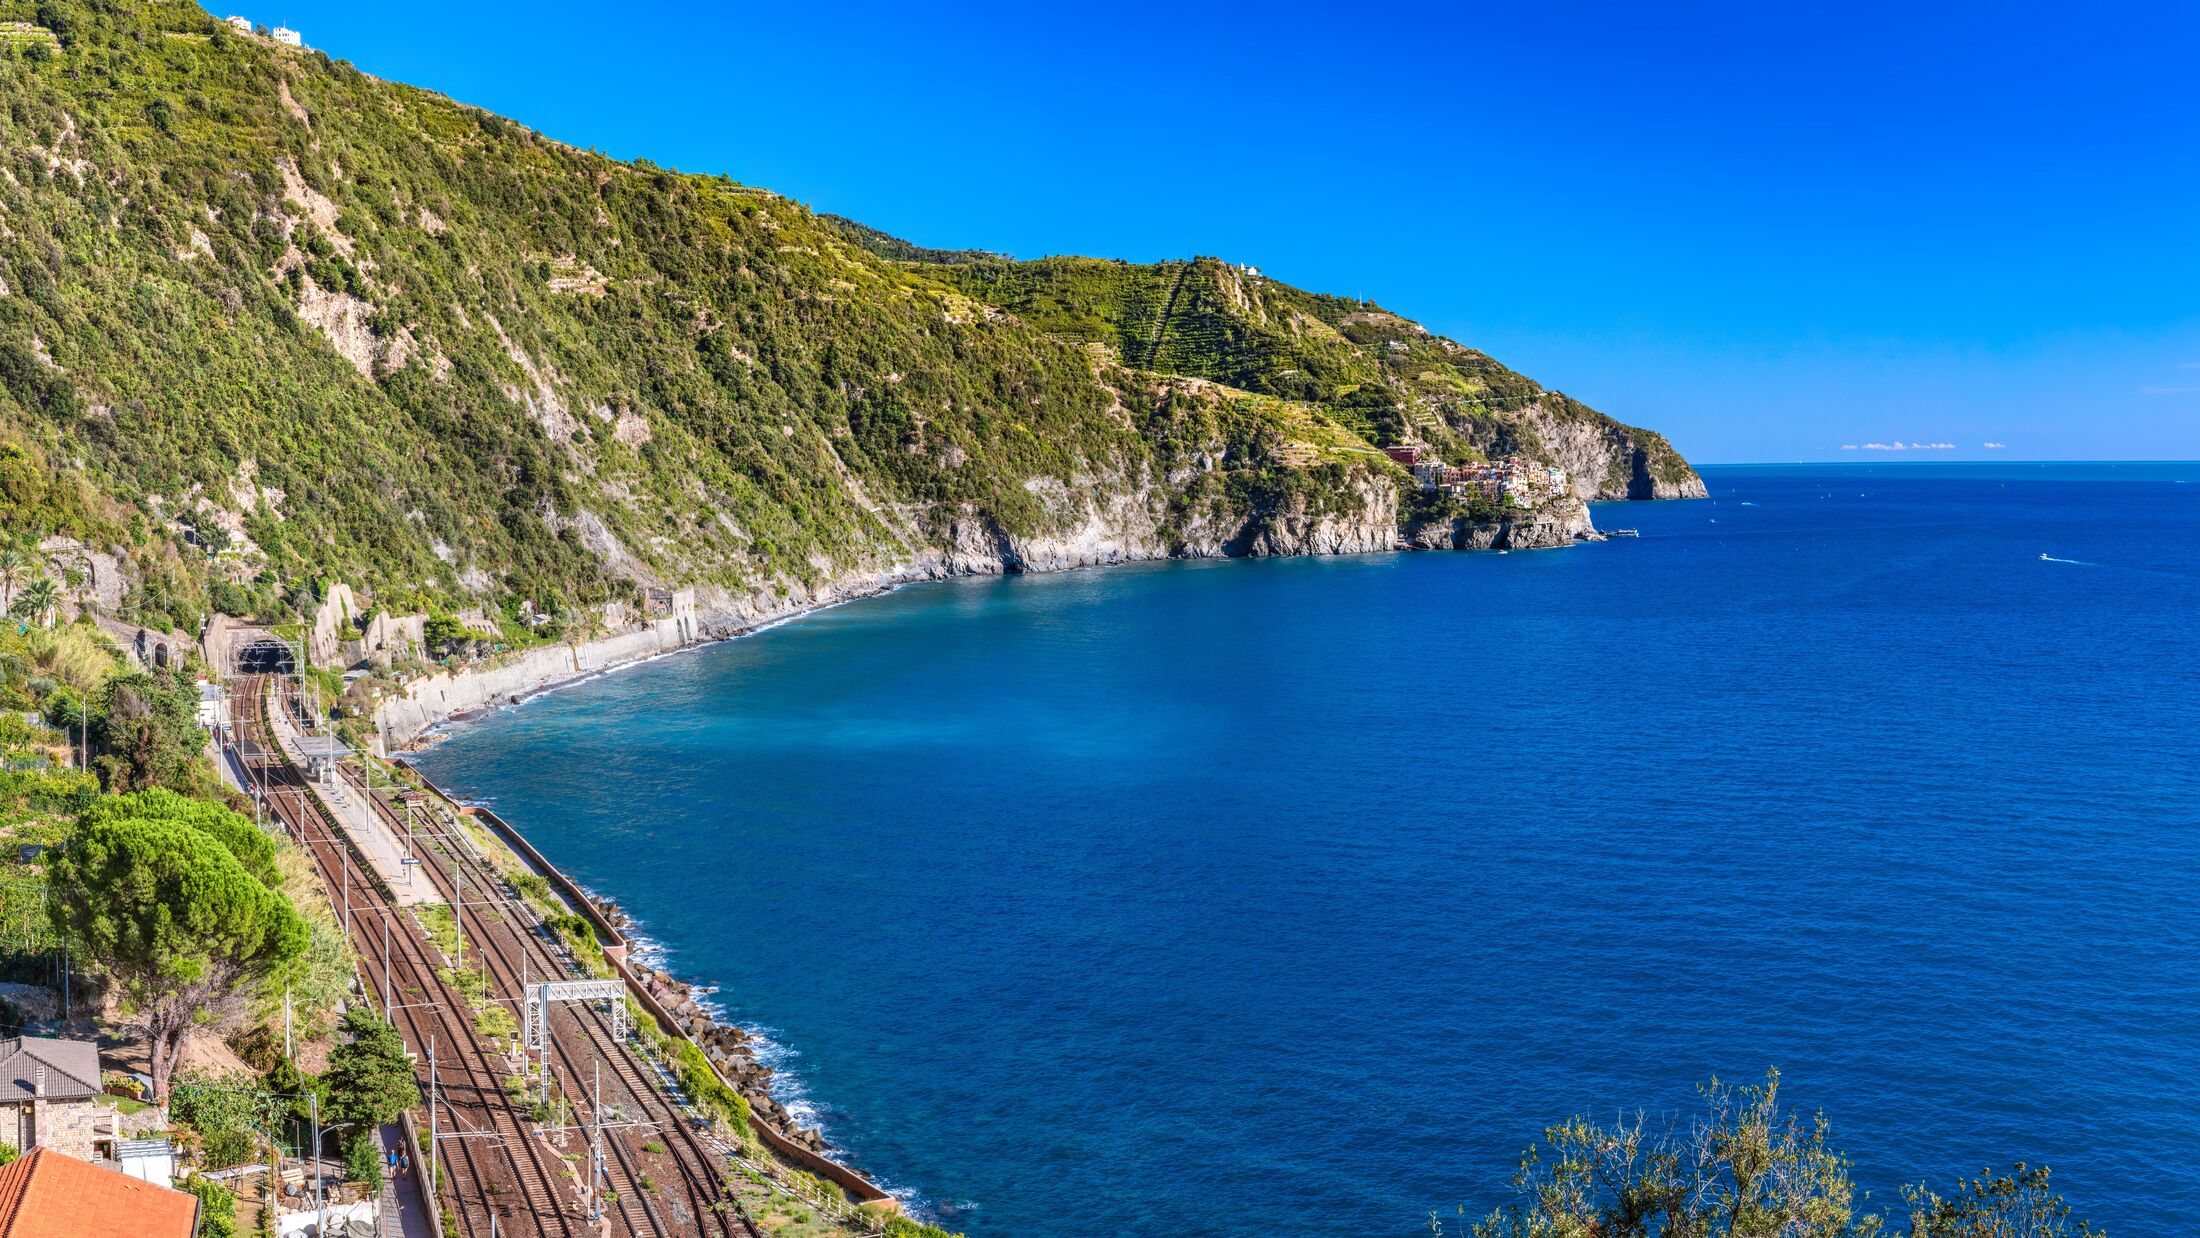 Train in Cinque Terre, Italy at summer. Transport in popular tourist destination